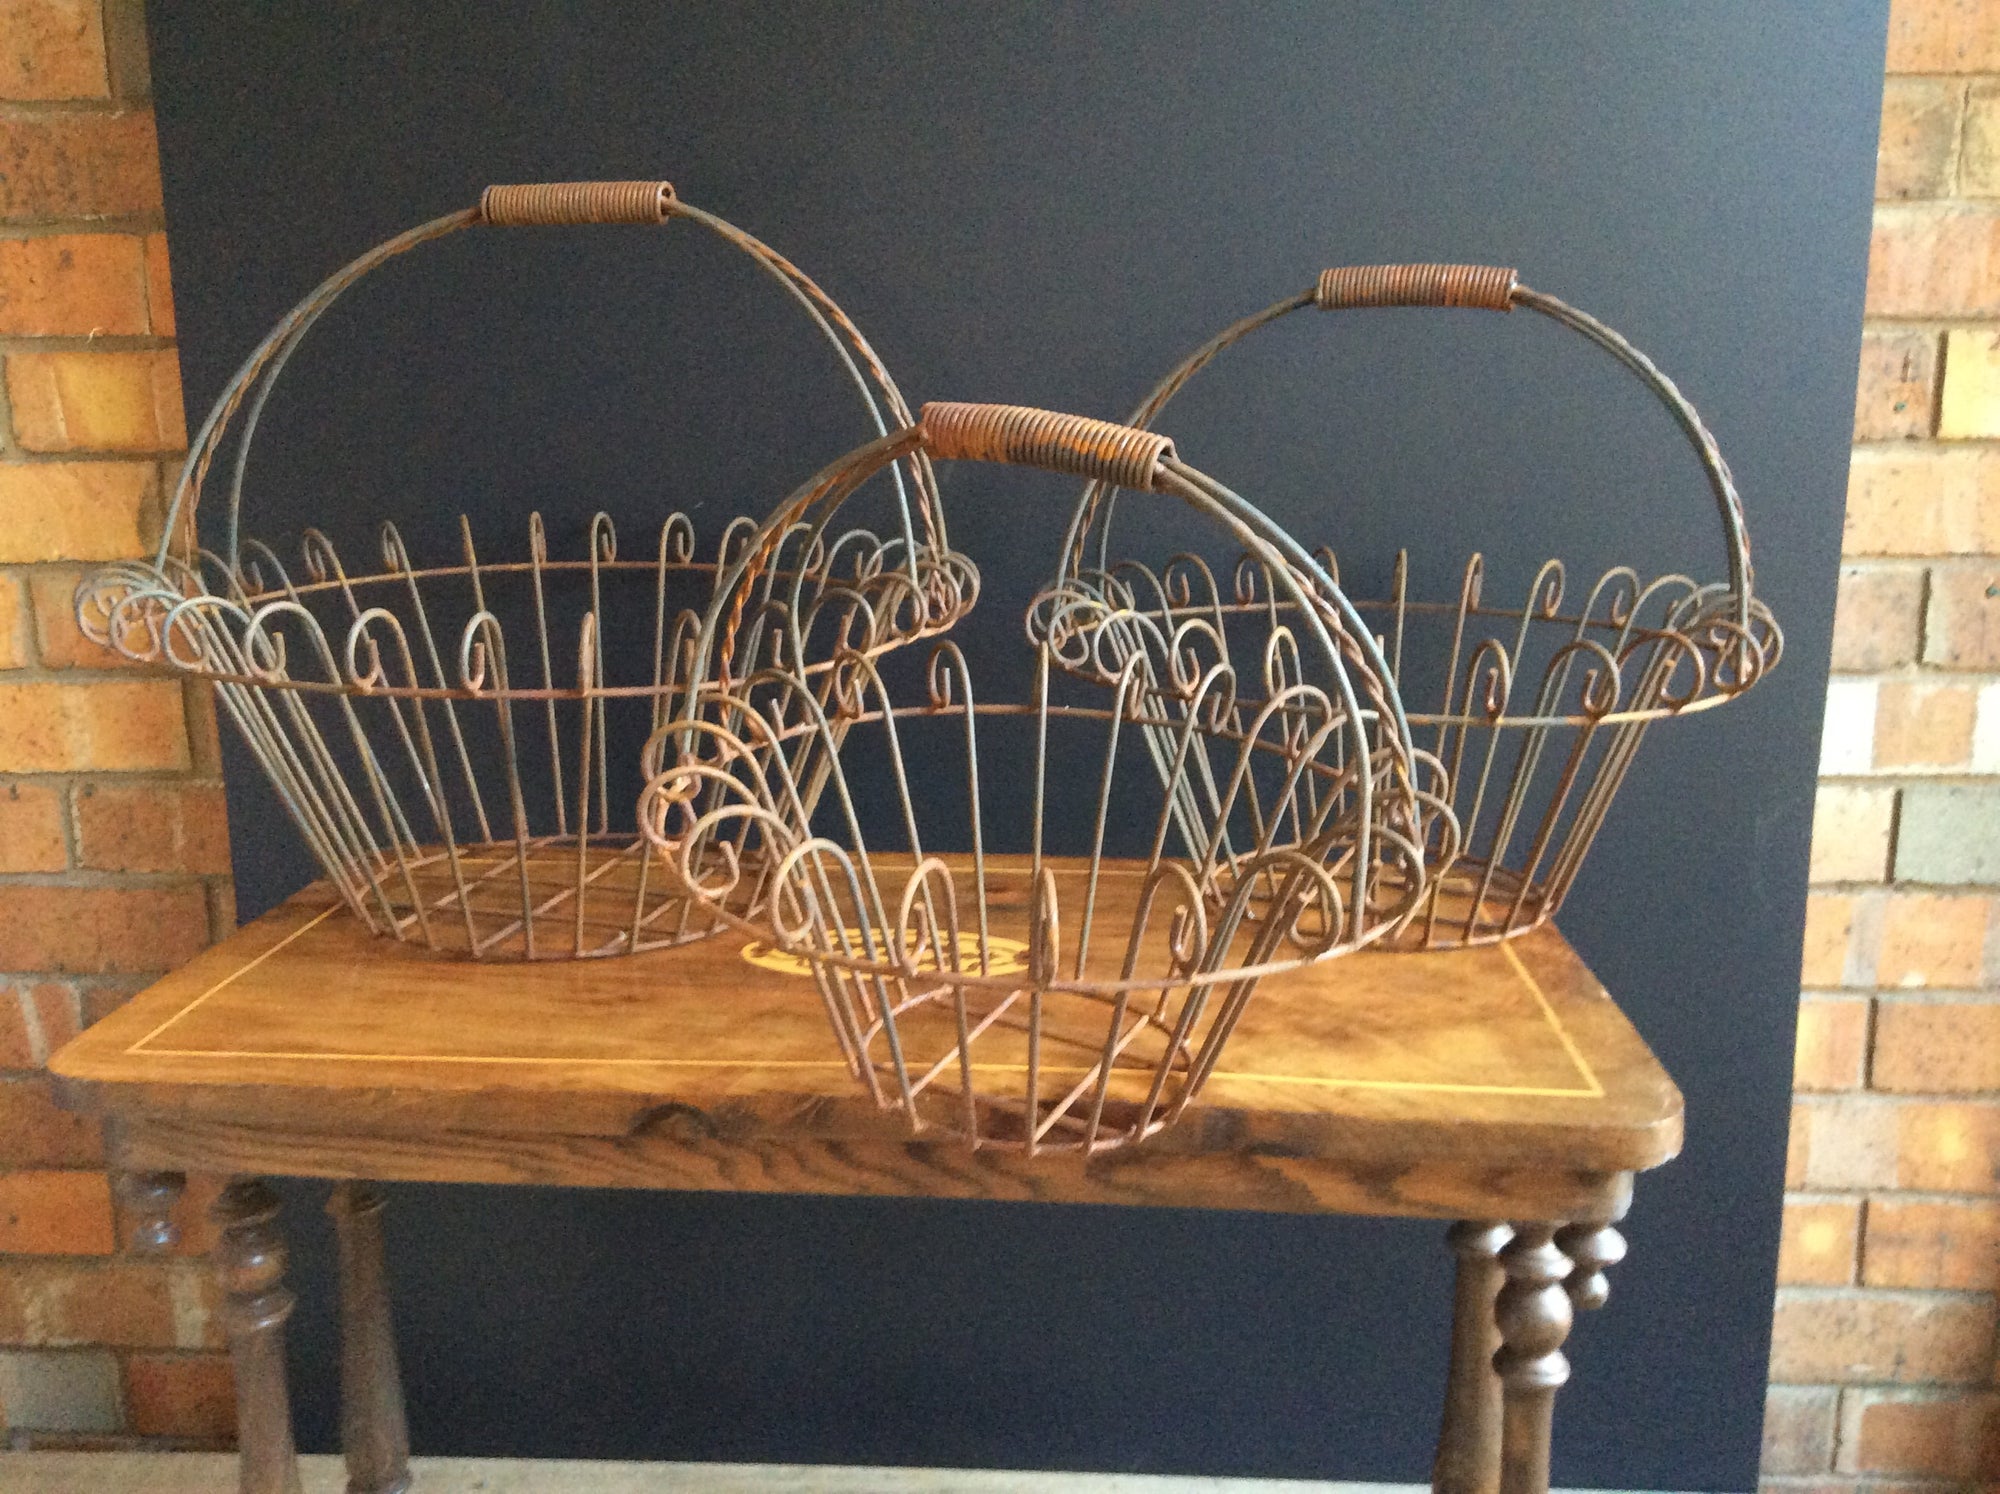   Set of Three -Handled Rust baskets